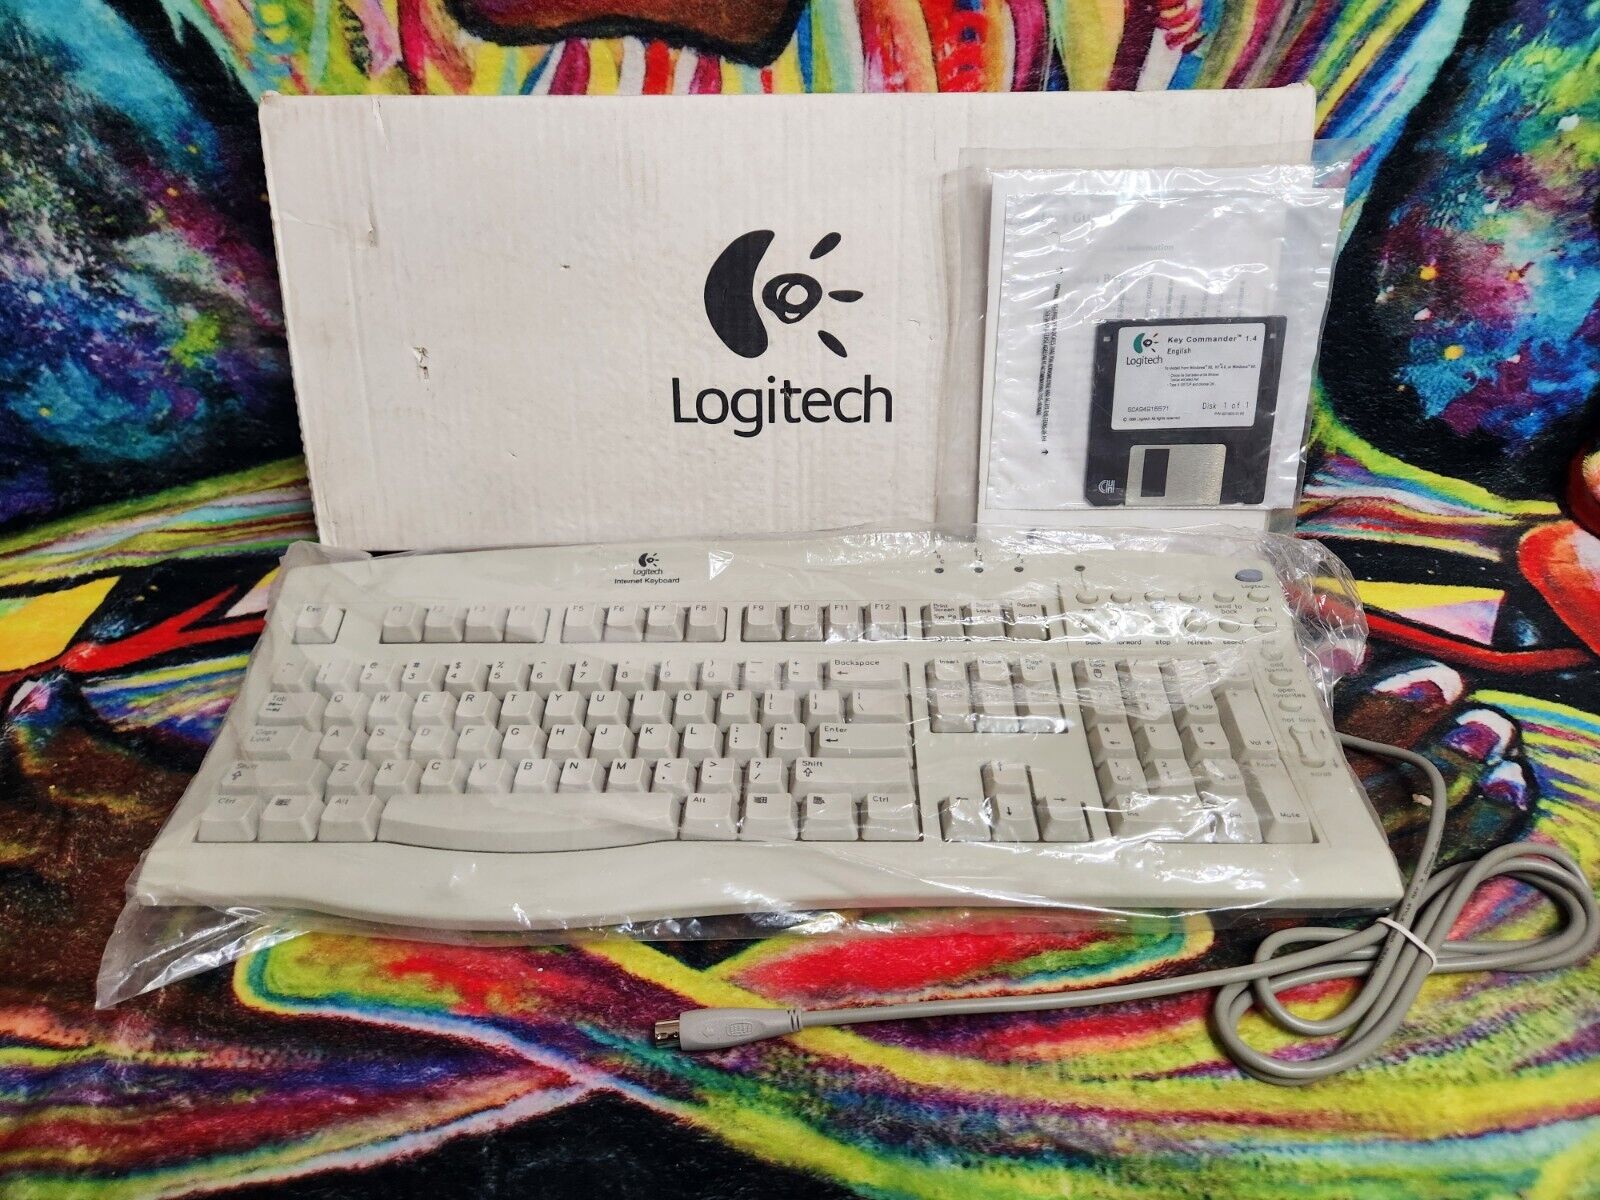 New Vintage Logitech Keyboard SK-2500 Model Y-SB3 with Drivers Open Box Unused